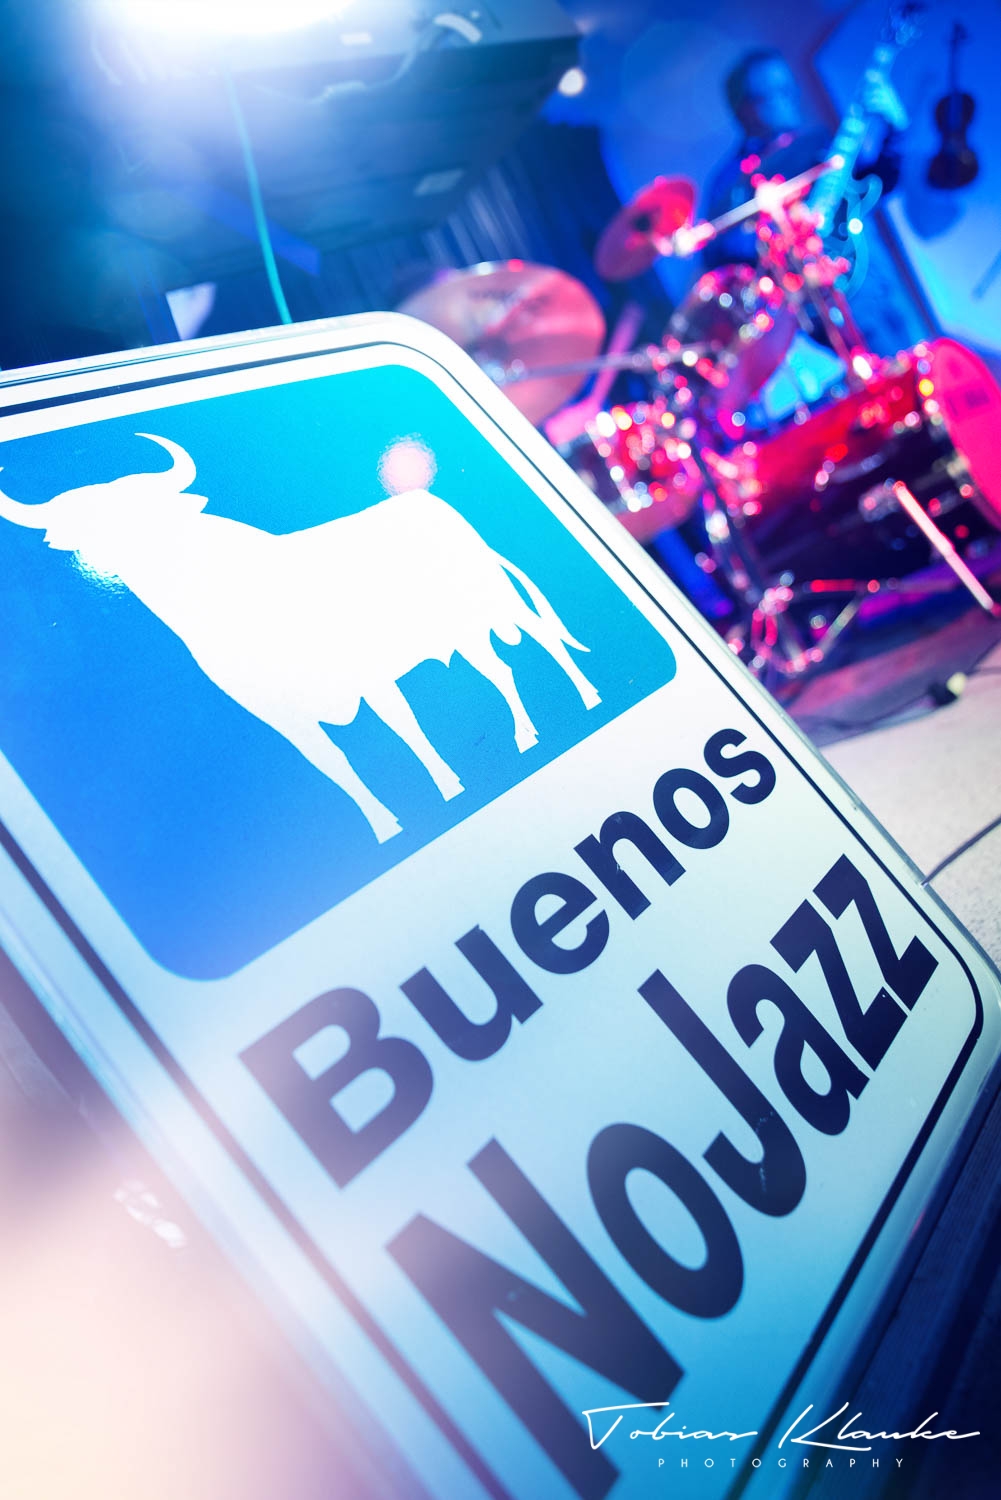 Buenos No Jazz